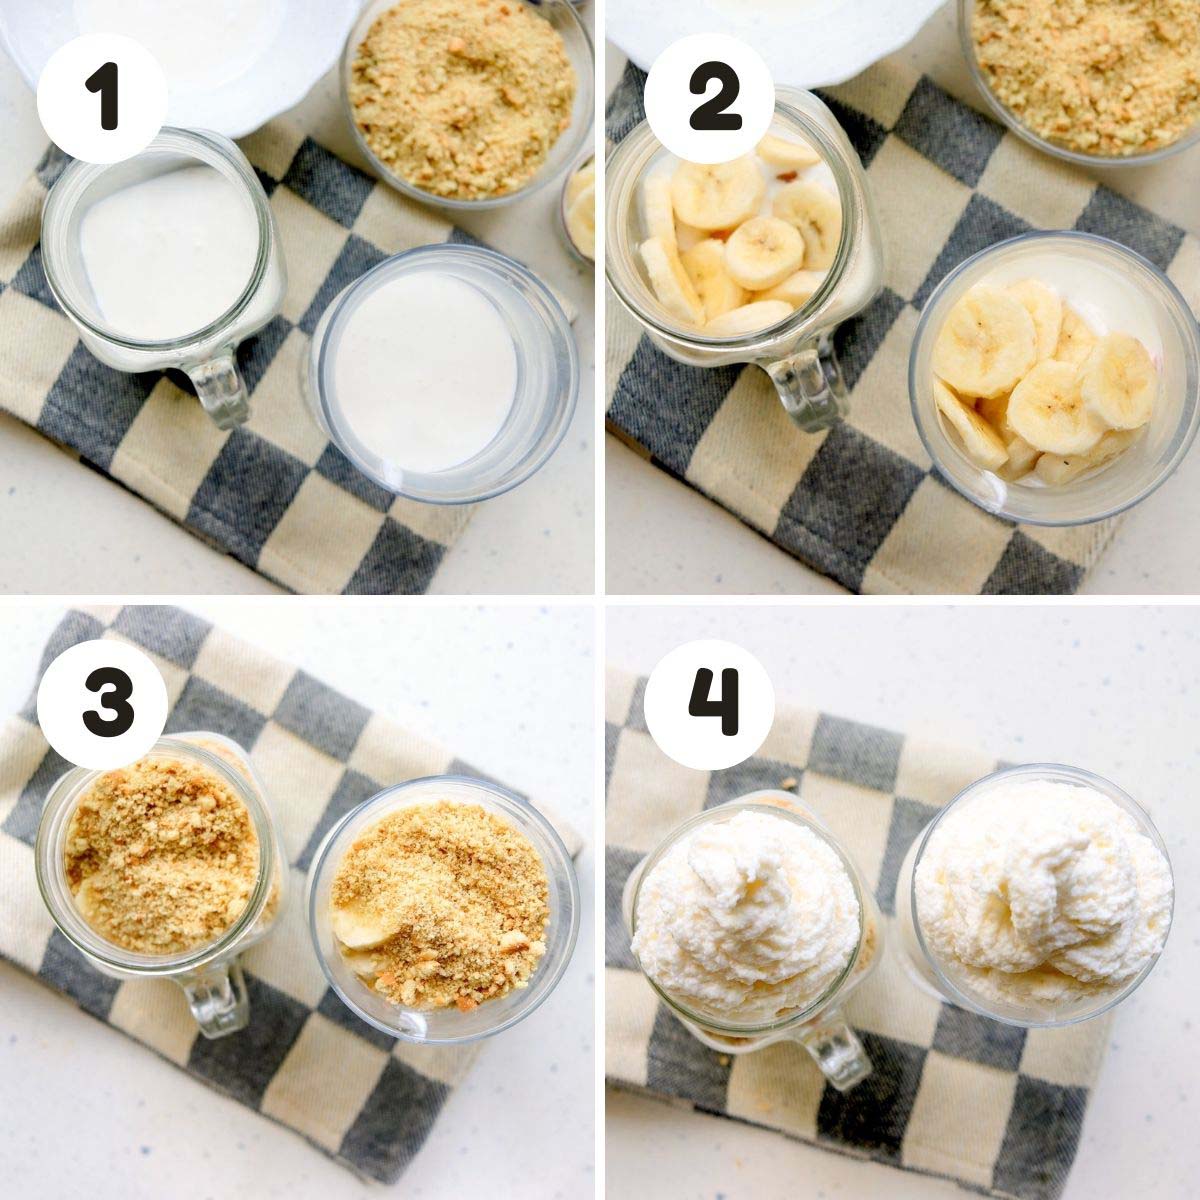 Steps to make the banana cream pie.